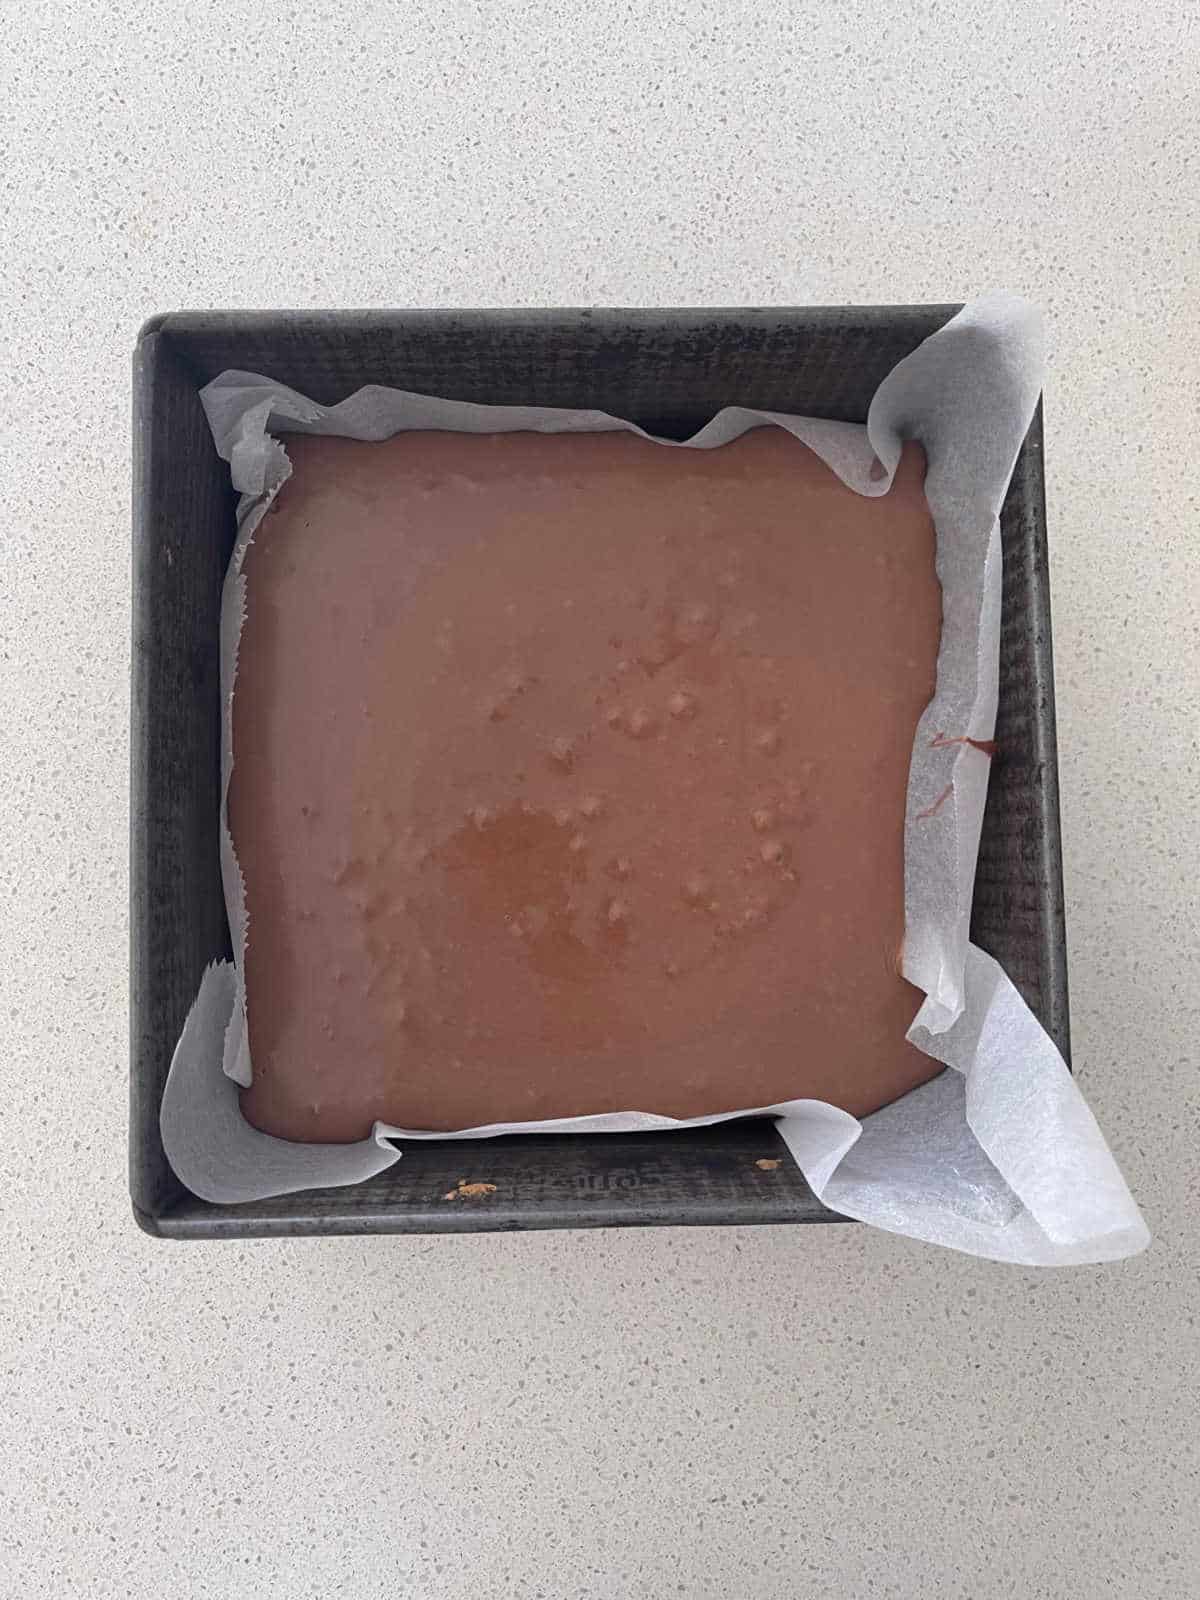 chocolate fudge in baking tin.